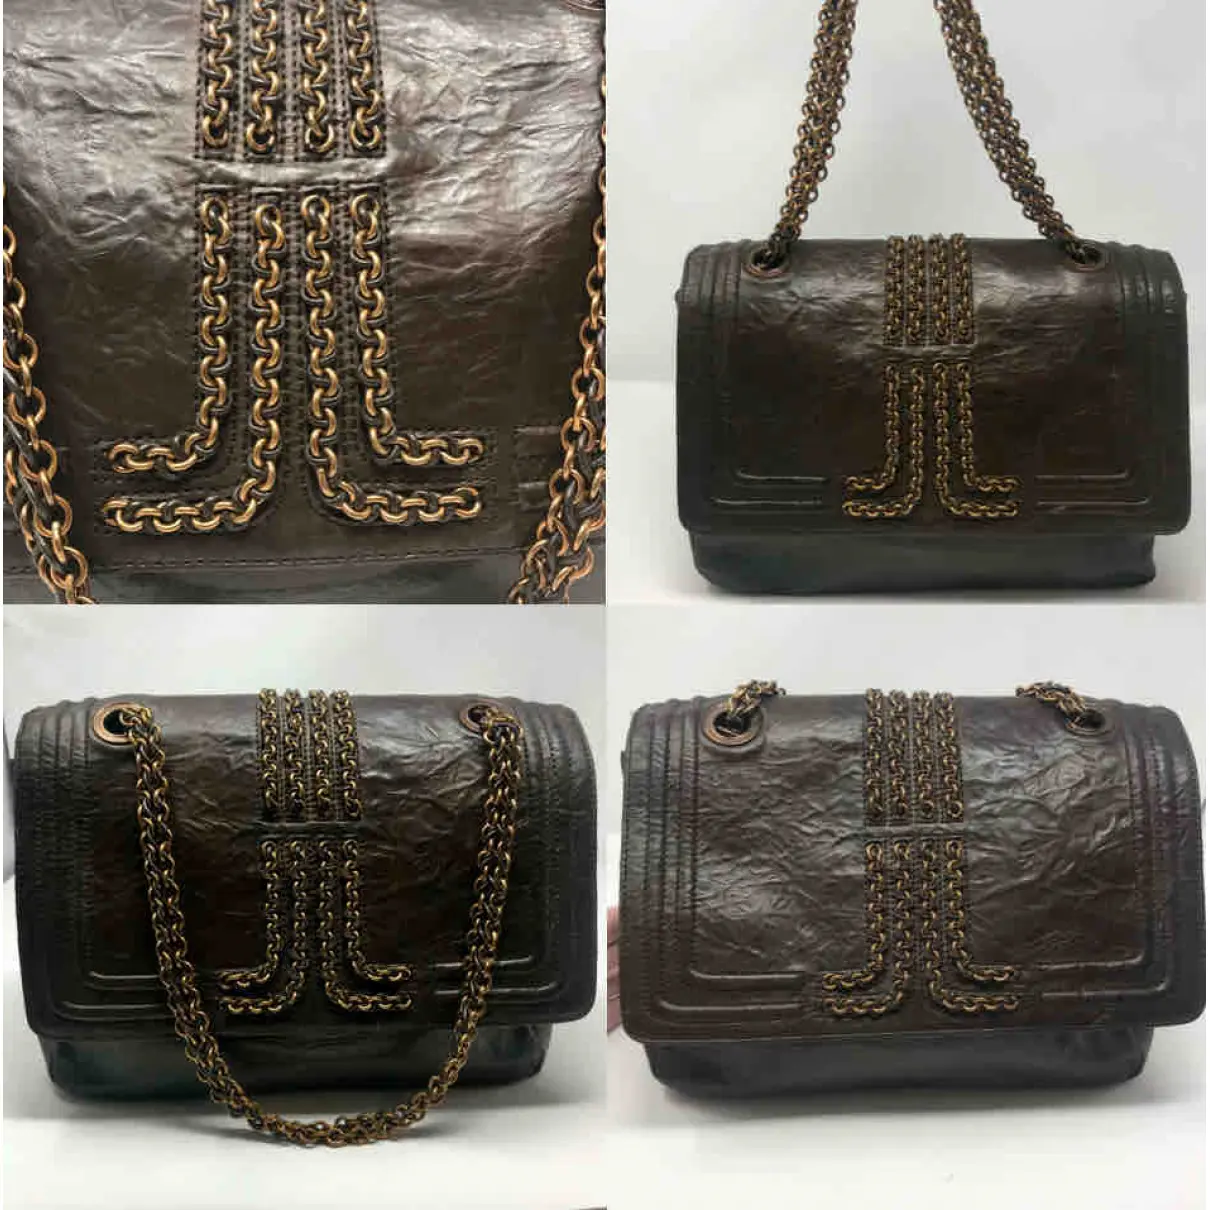 Leather handbag Lanvin